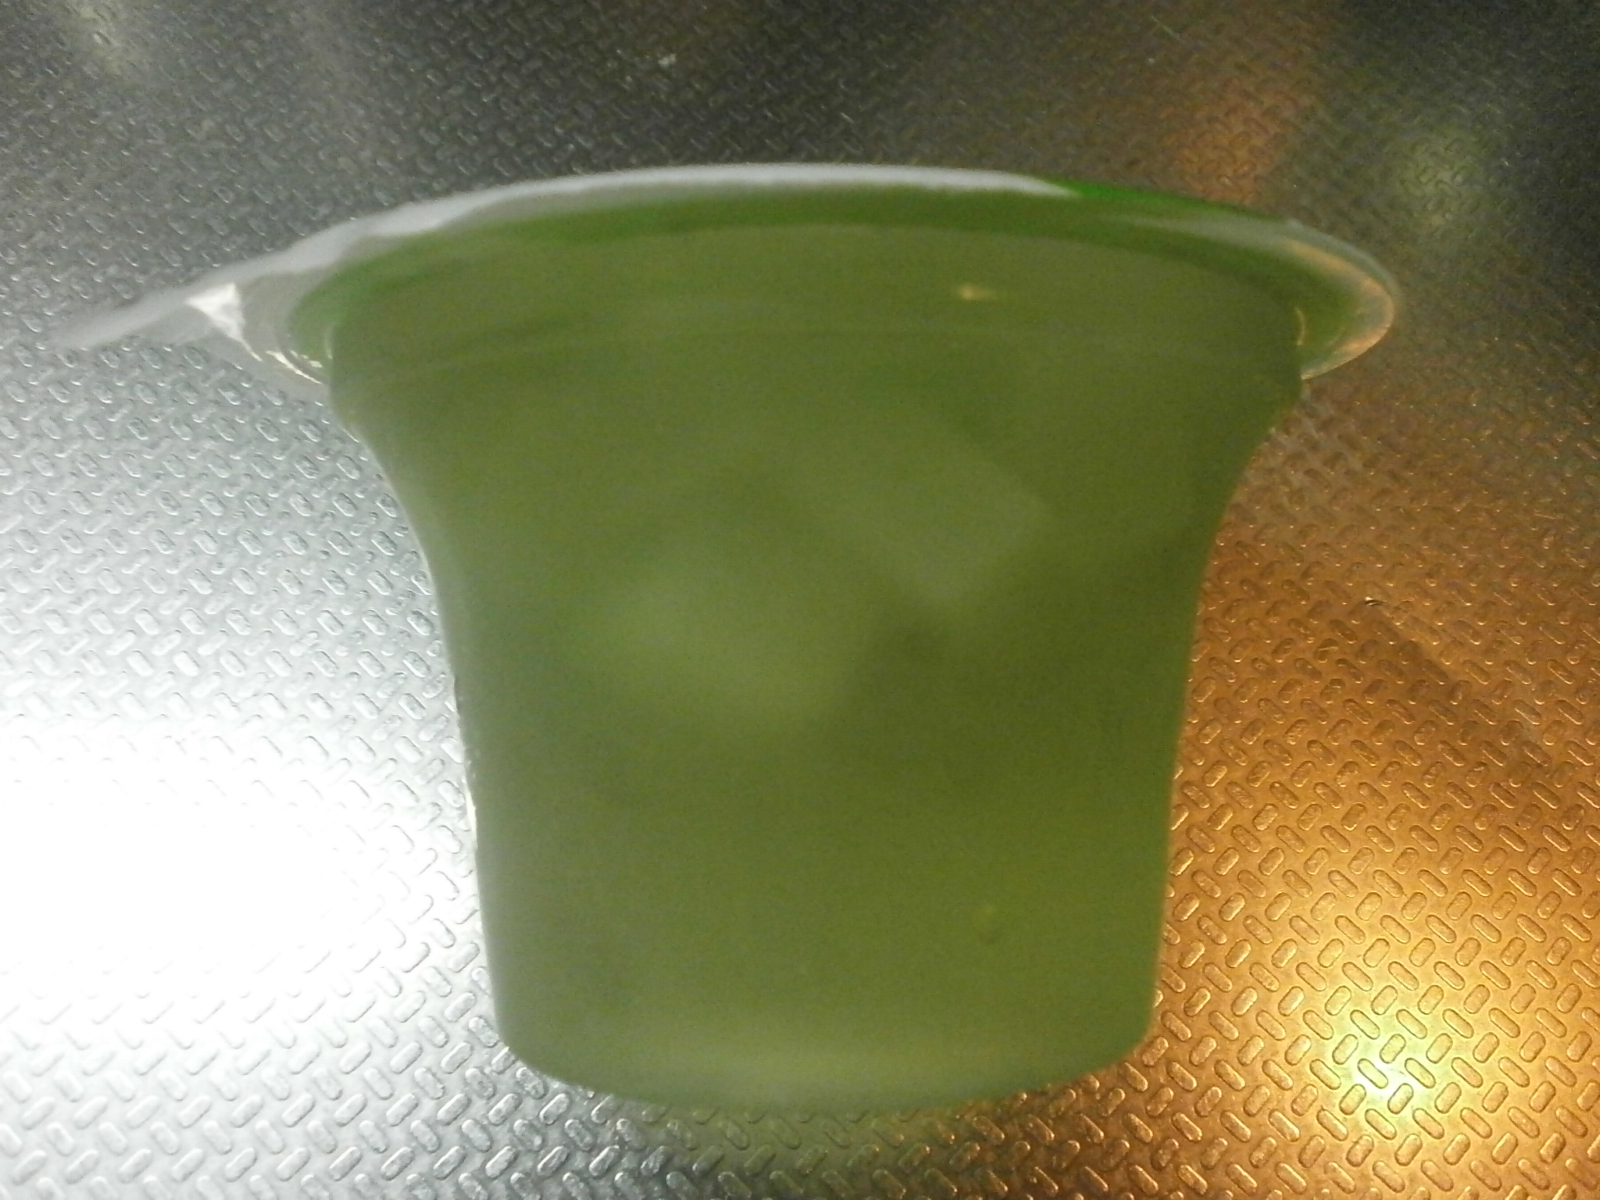 Noncaloric flavor jelly Muscat (TOPVALU)